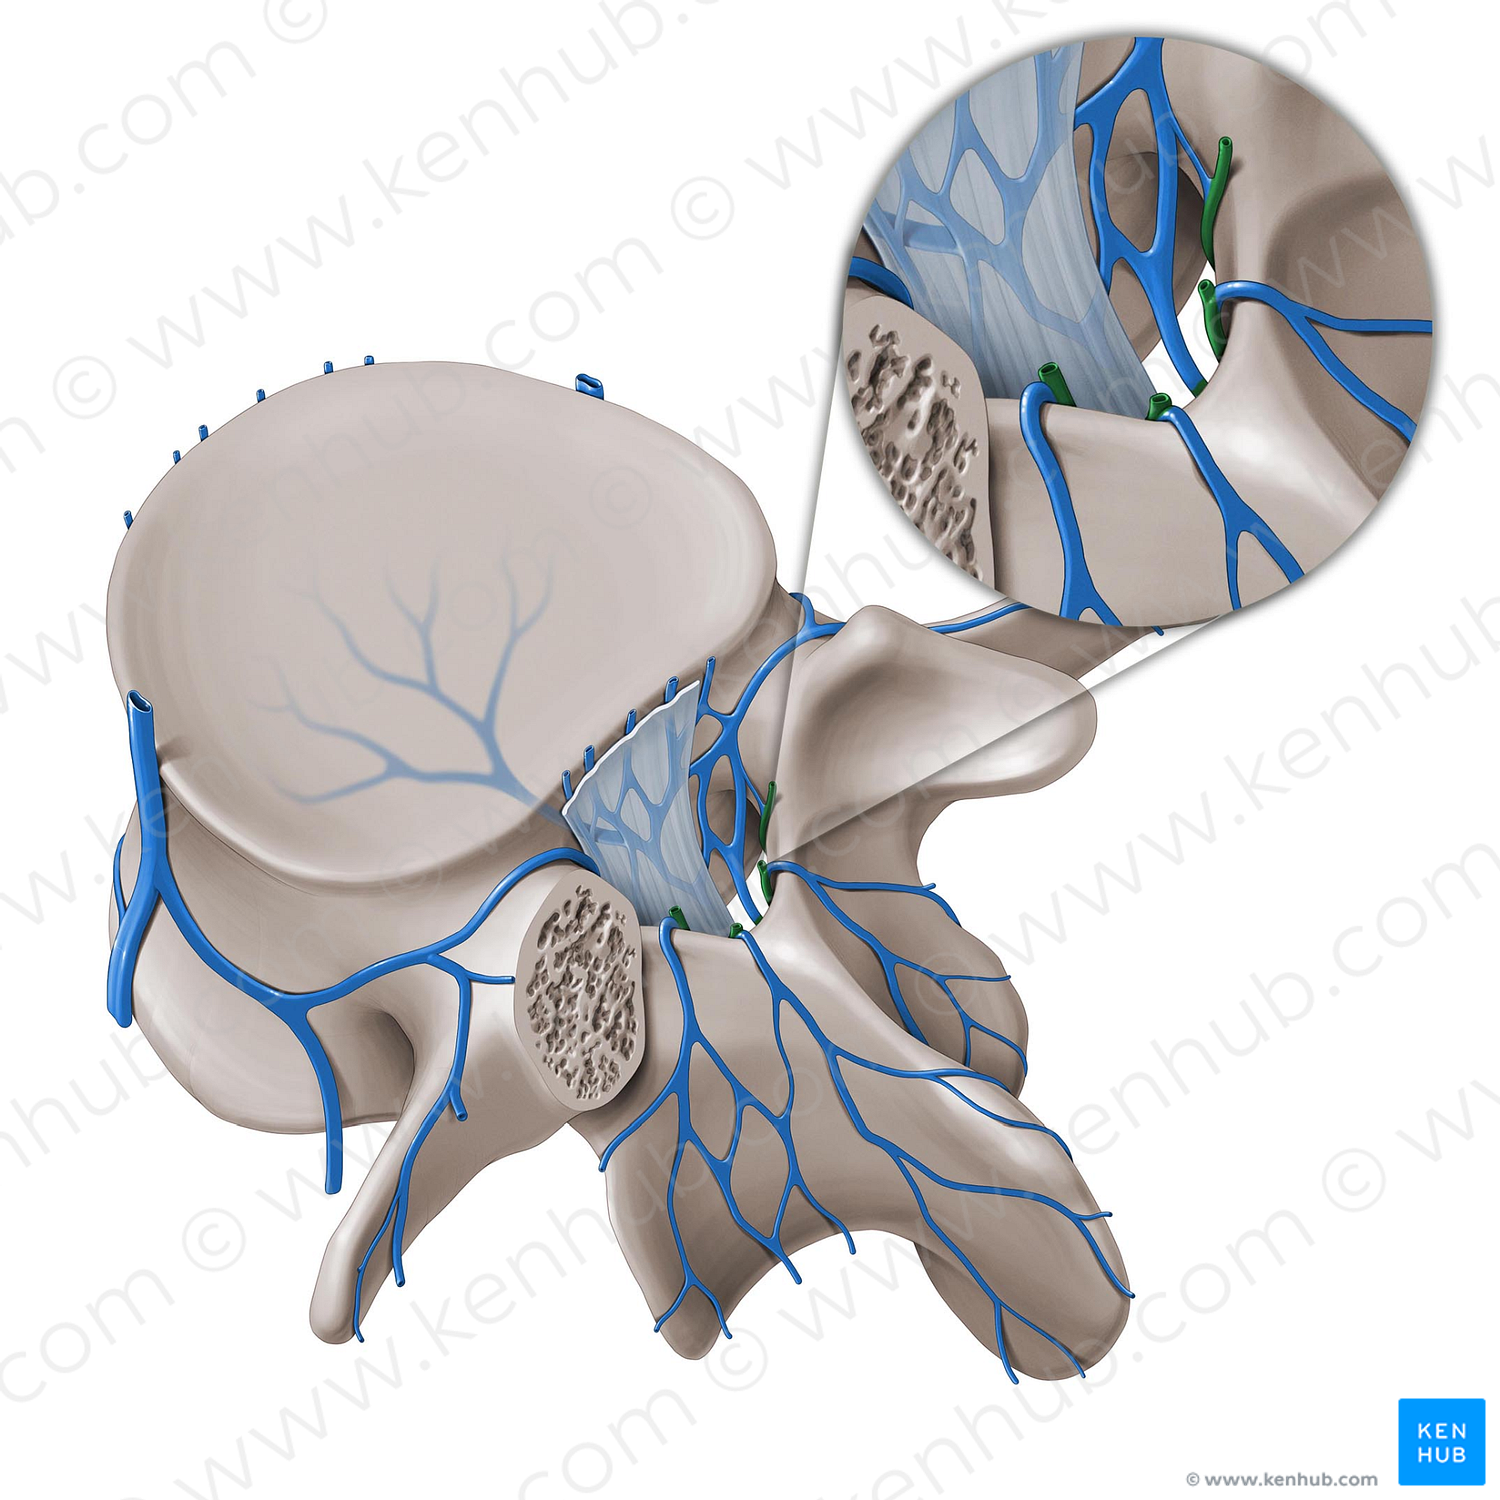 Posterior internal vertebral venous plexus (#8059)